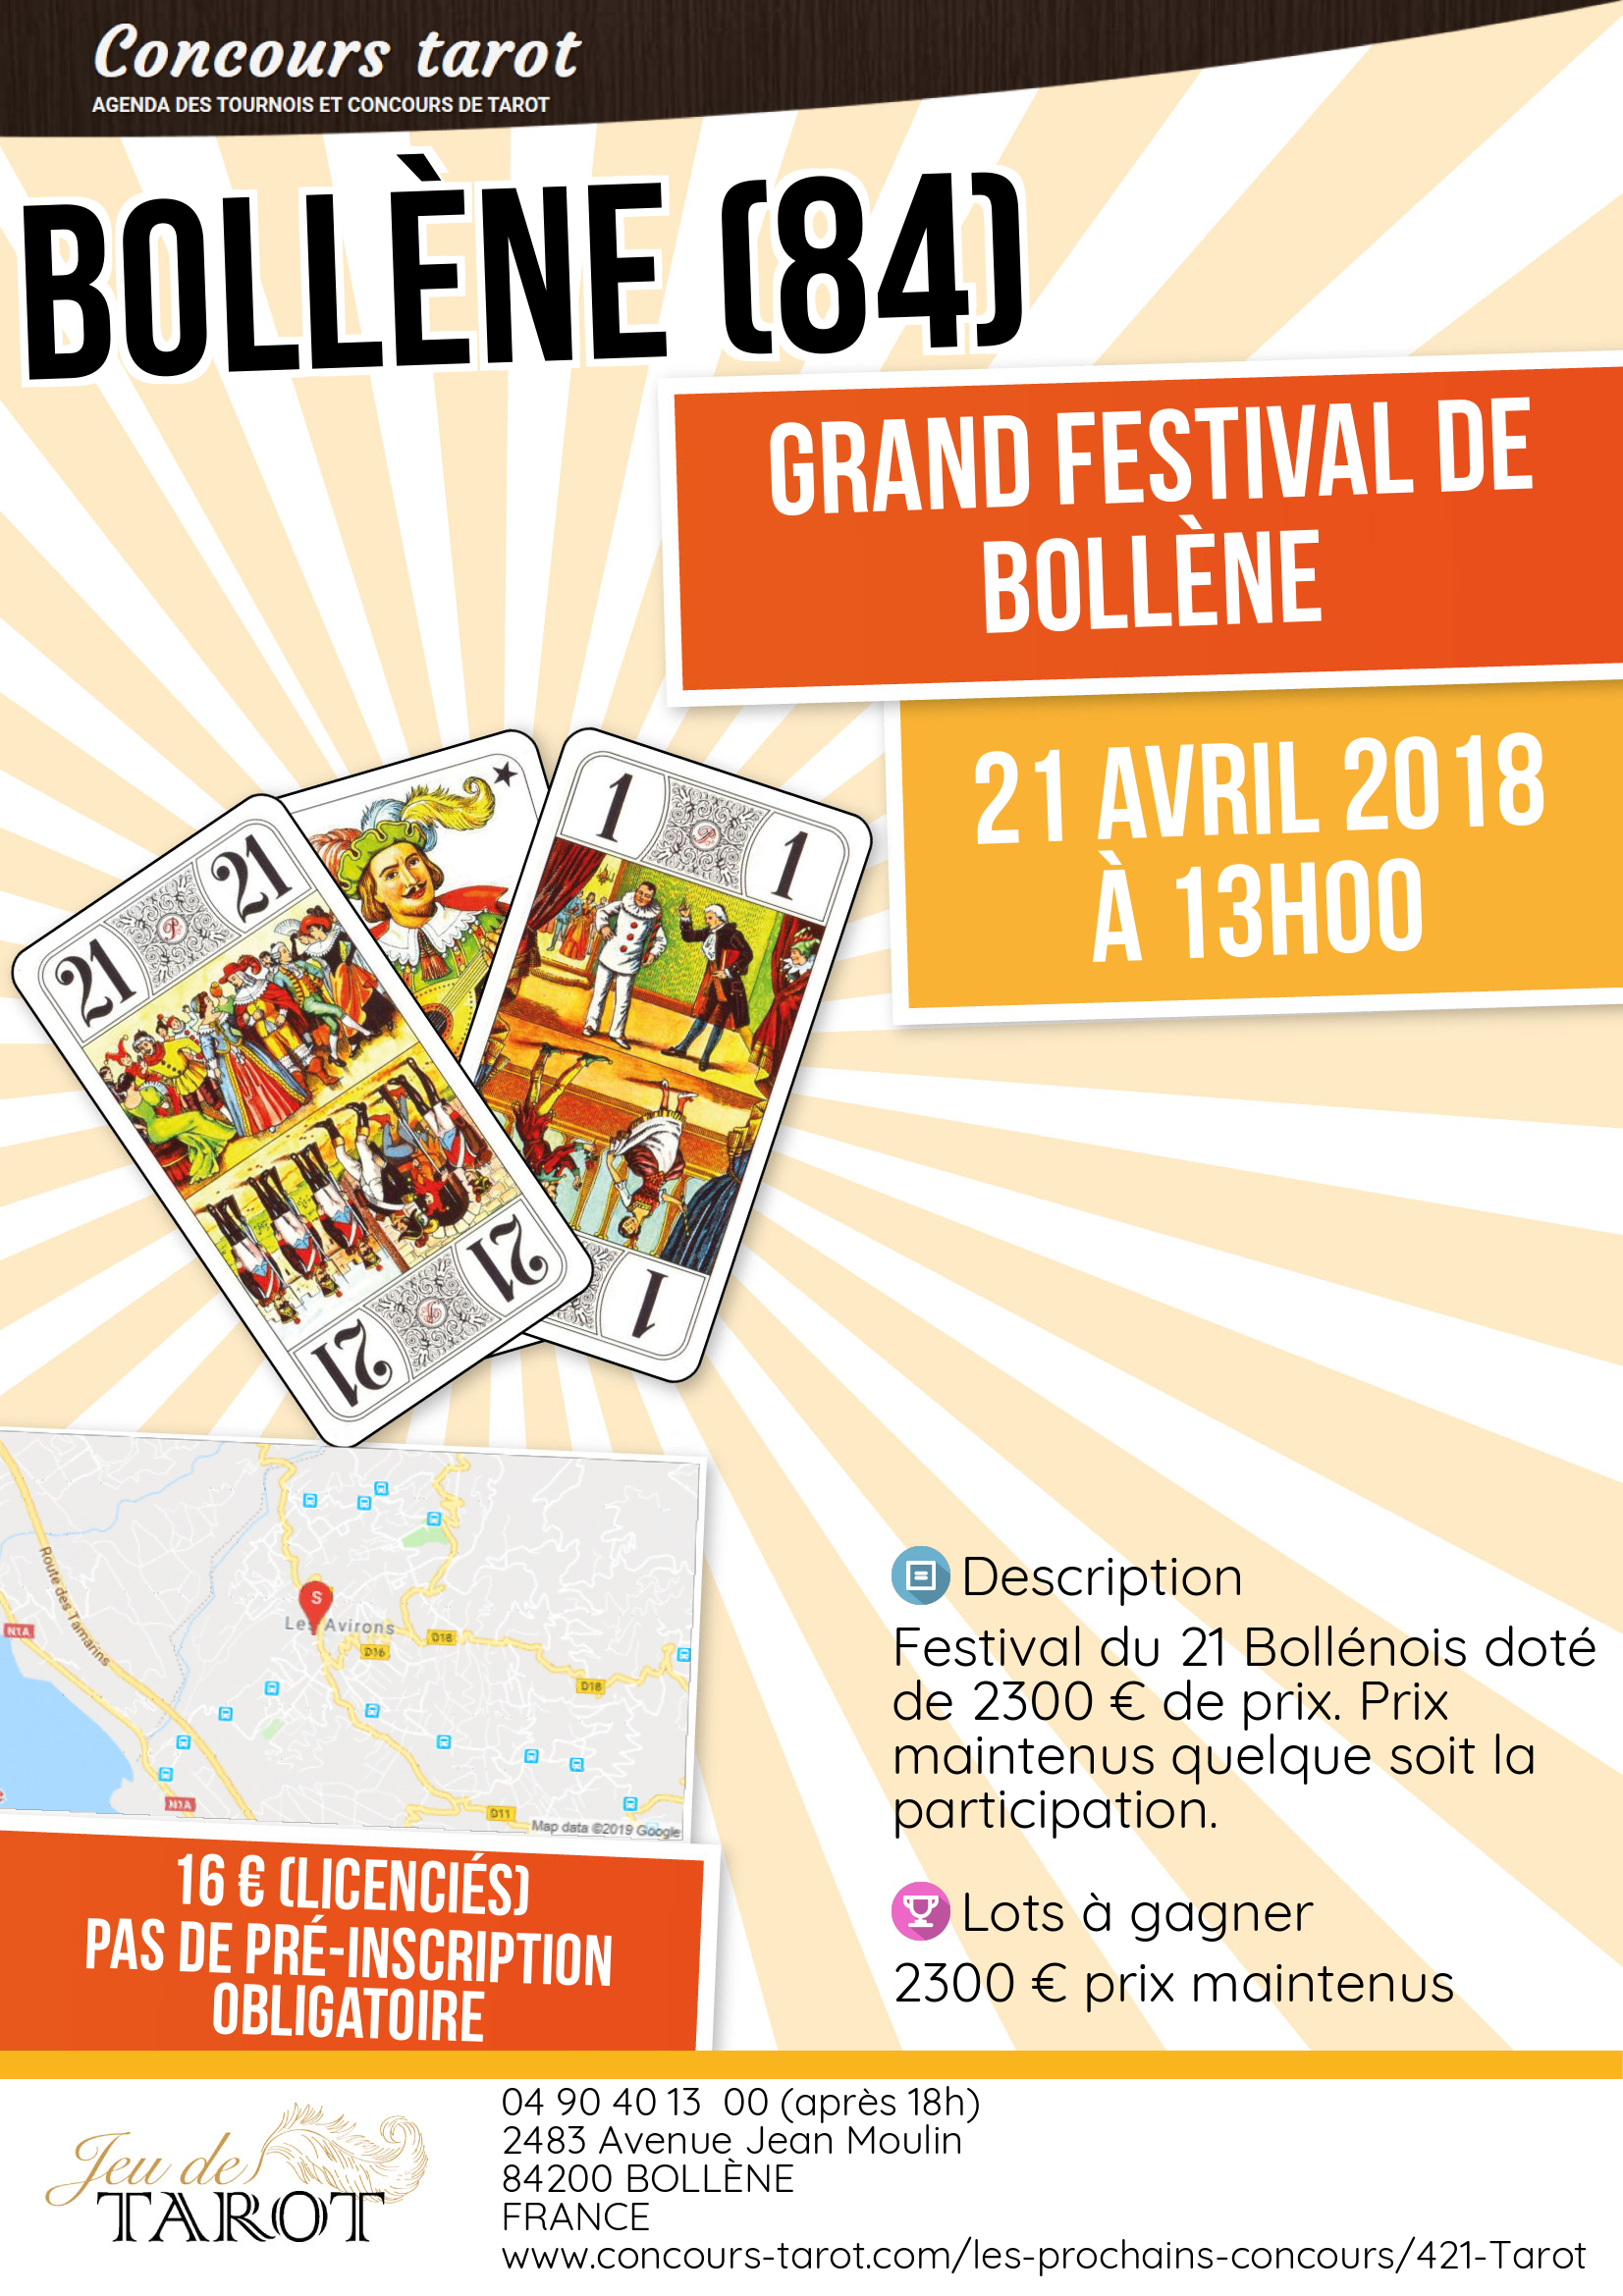 Grand Festival de Bollene